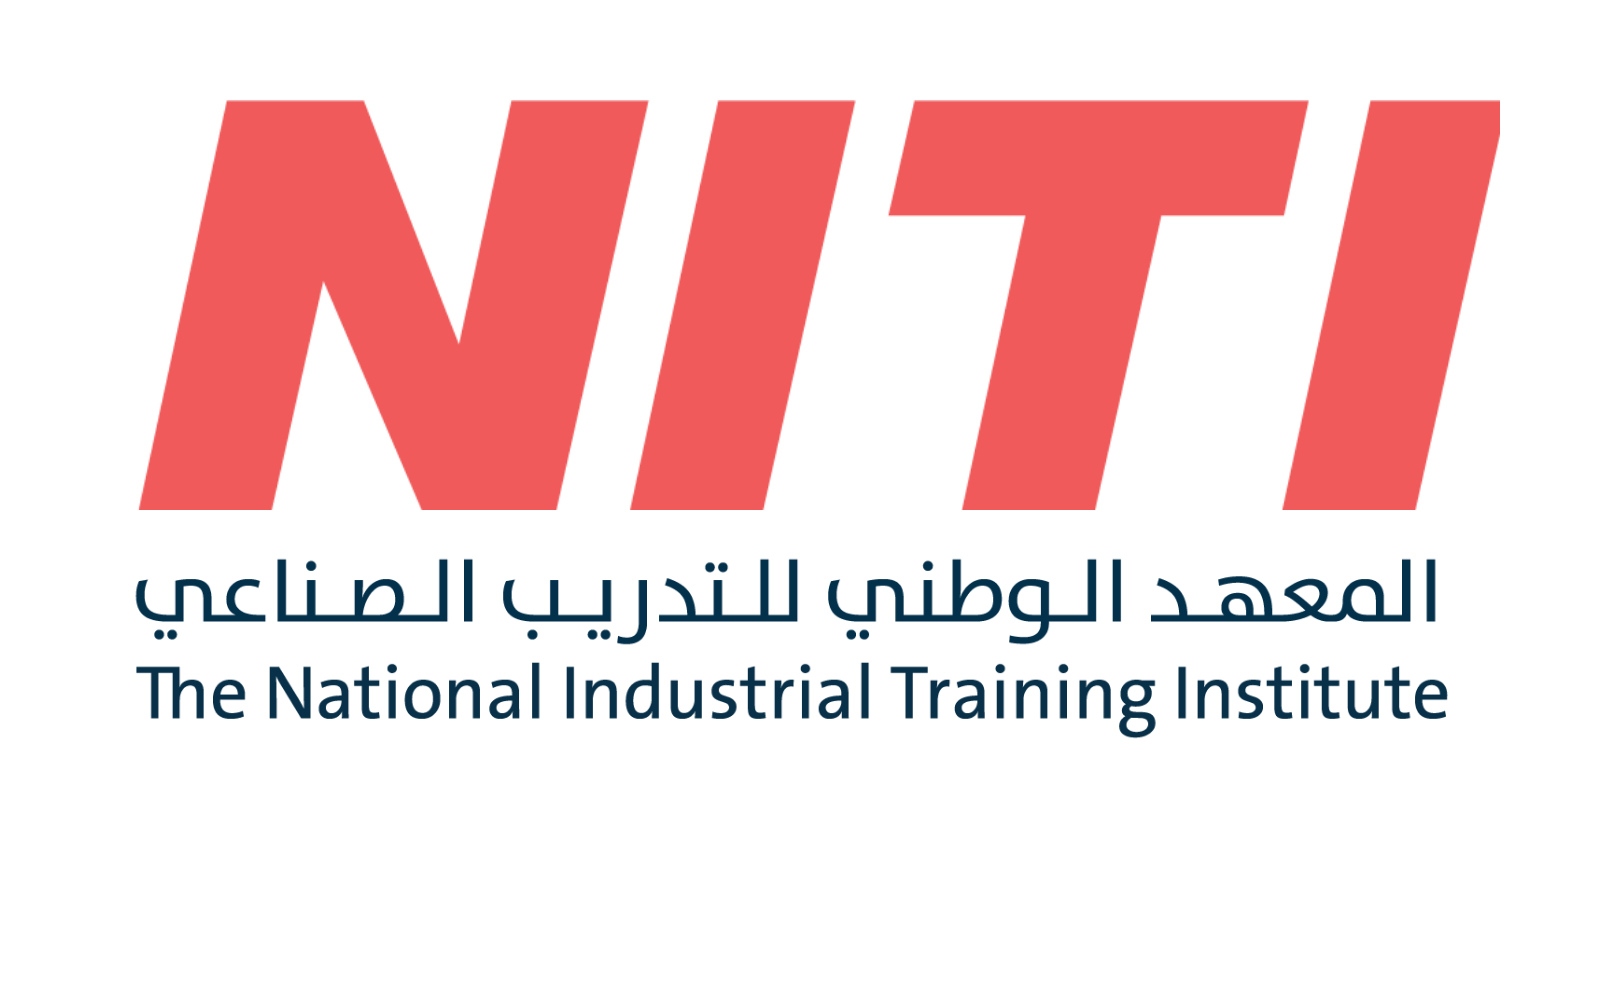 National Industrial Training Institute (NITI)